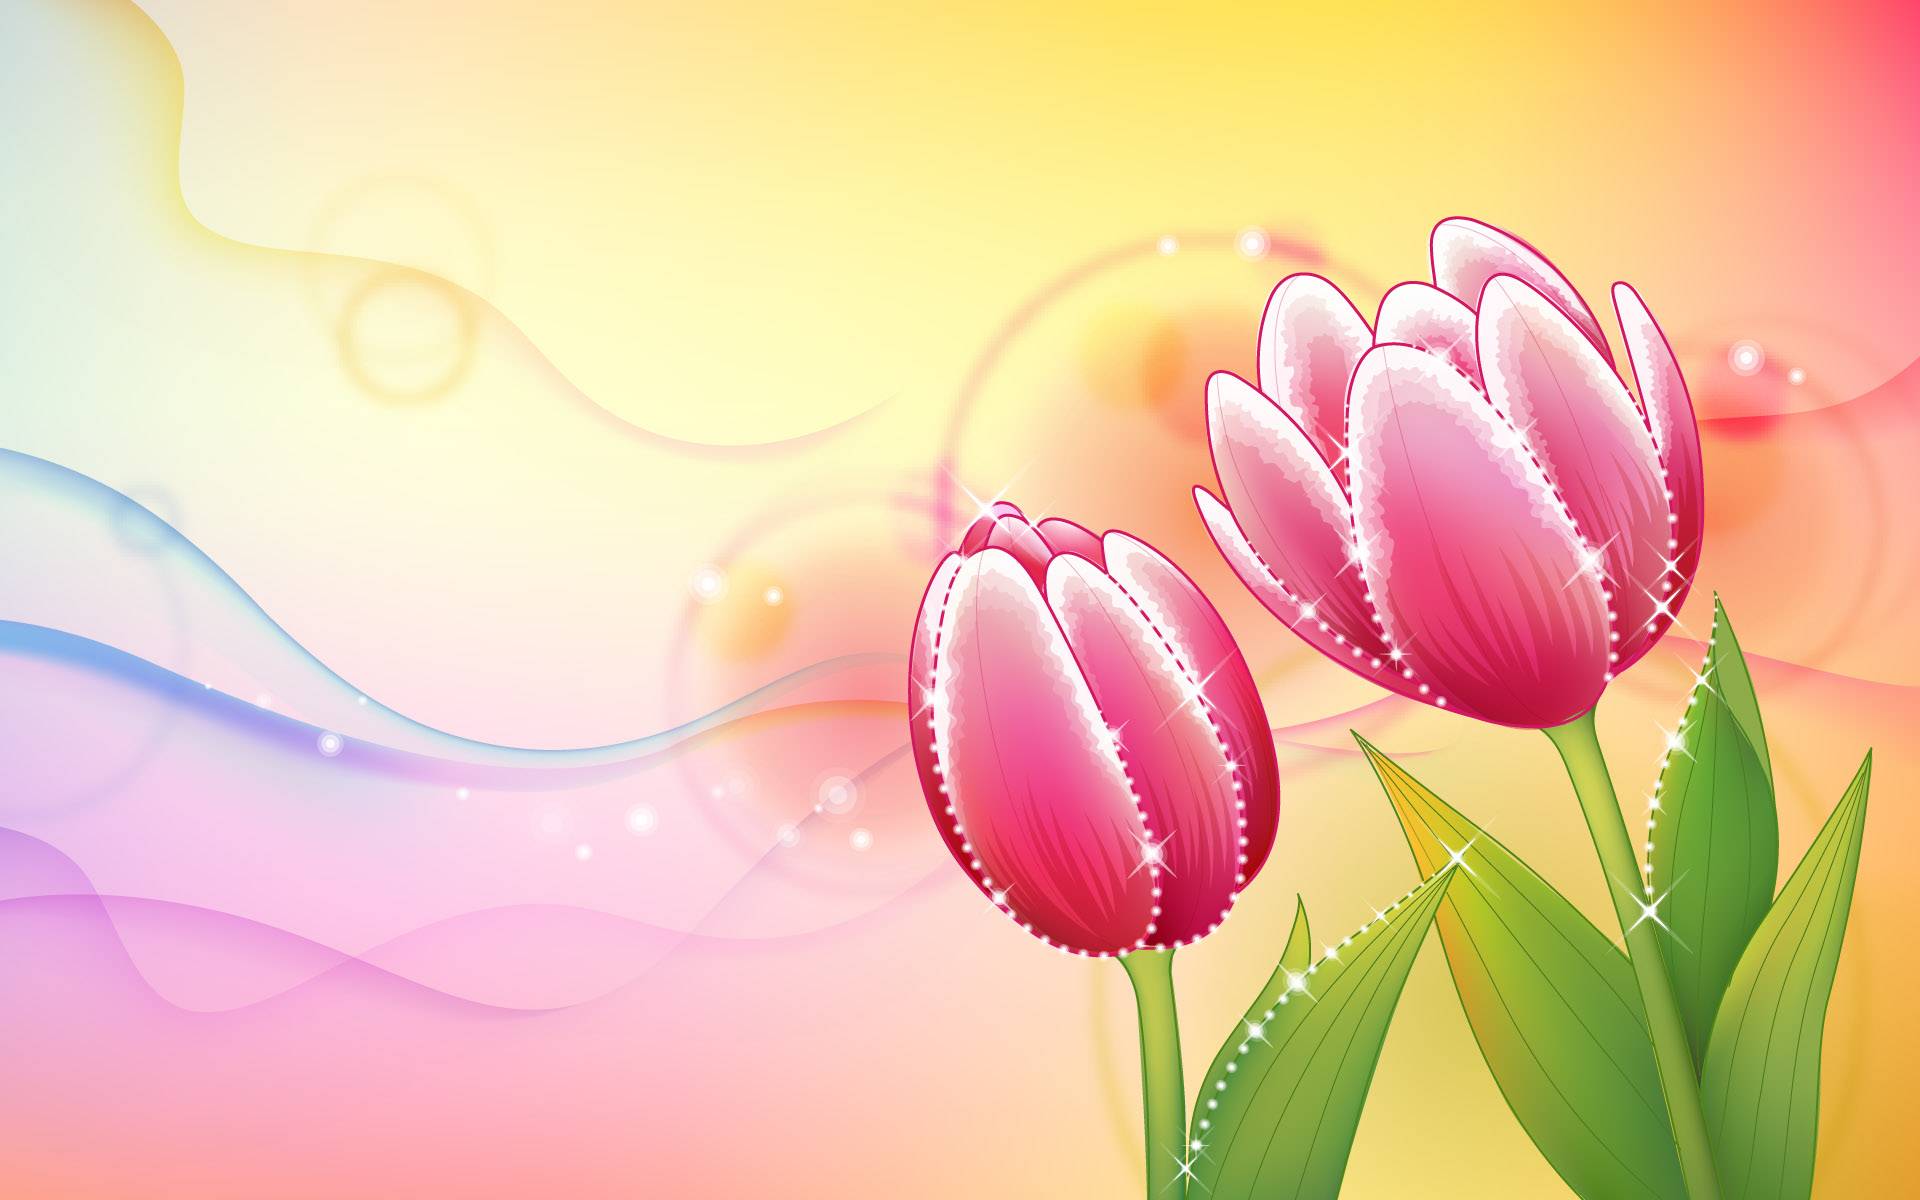 Flower Art Painting Background Wallpaper For Desktop Free Download